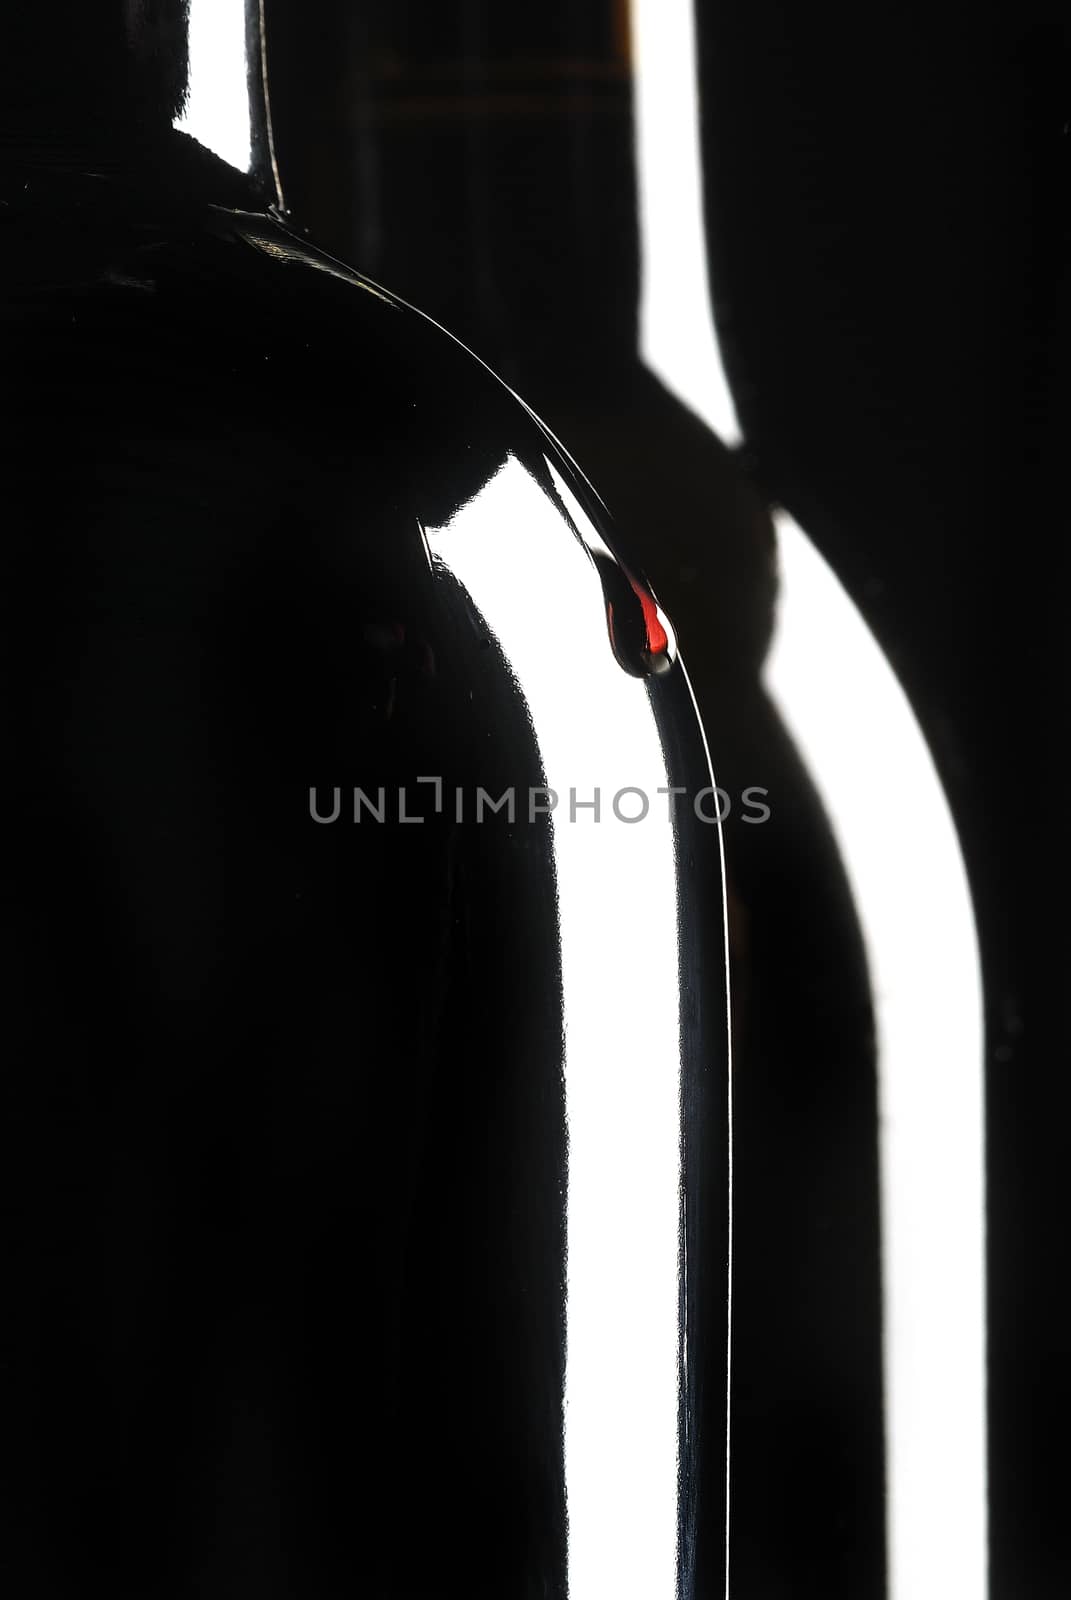 Two bottles of wine, wine drop, black background by jalonsohu@gmail.com